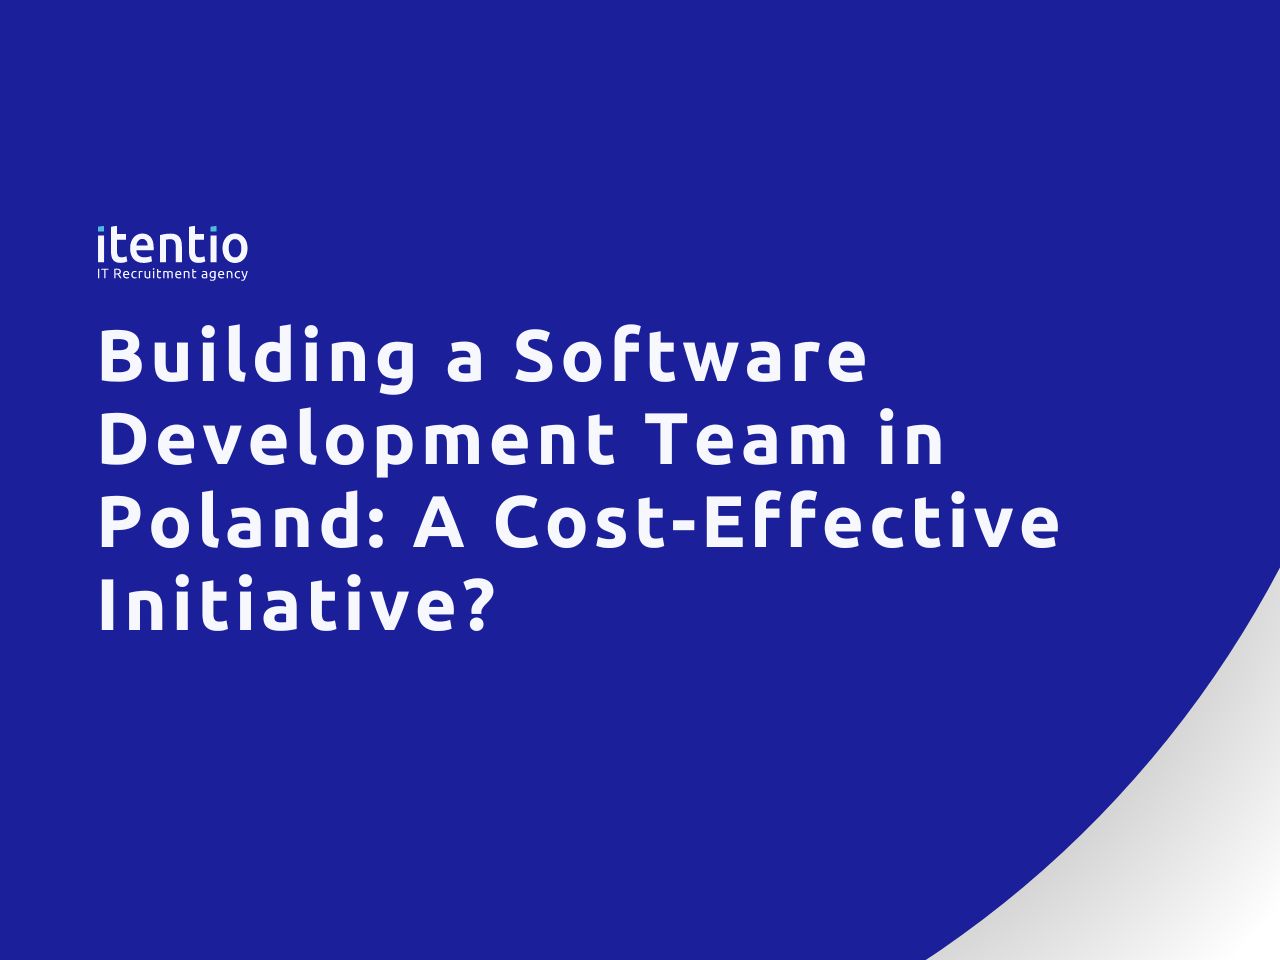 Building a Software Development Team in Poland: A Cost-Effective Initiative?